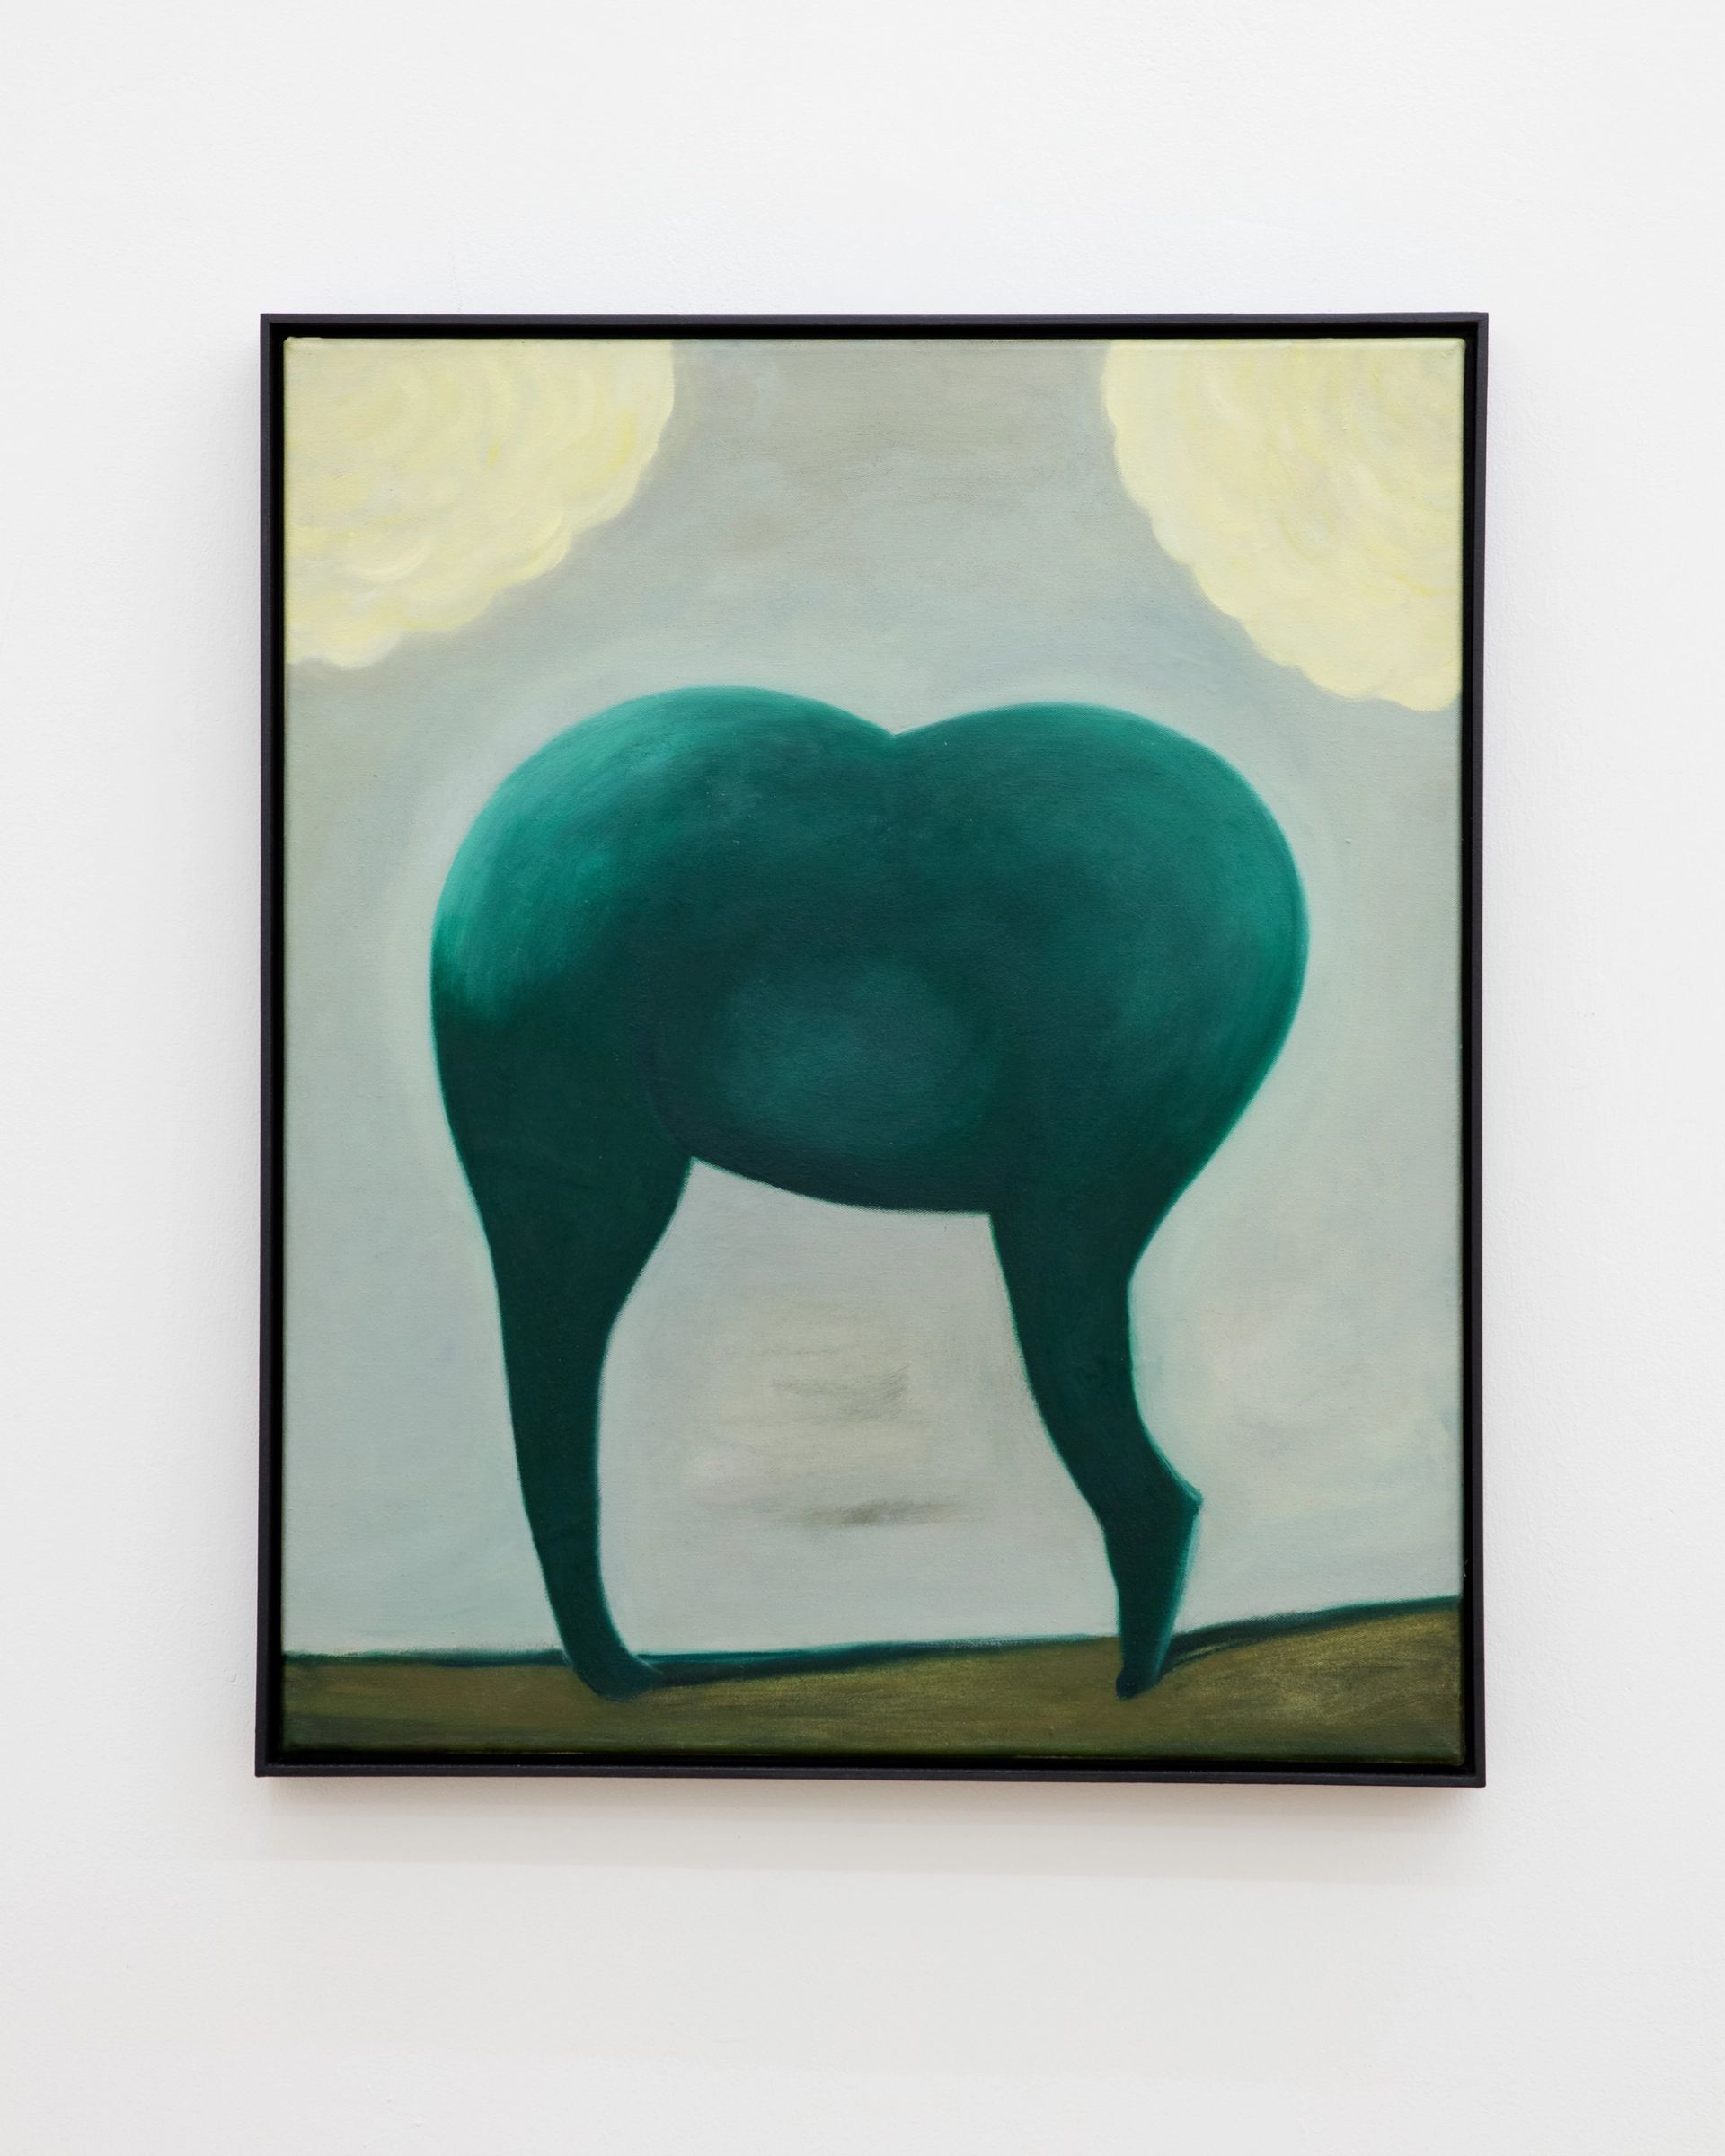 Veronika Hilger, Untitled, 2019, oil on canvas, 60 × 50 cm
